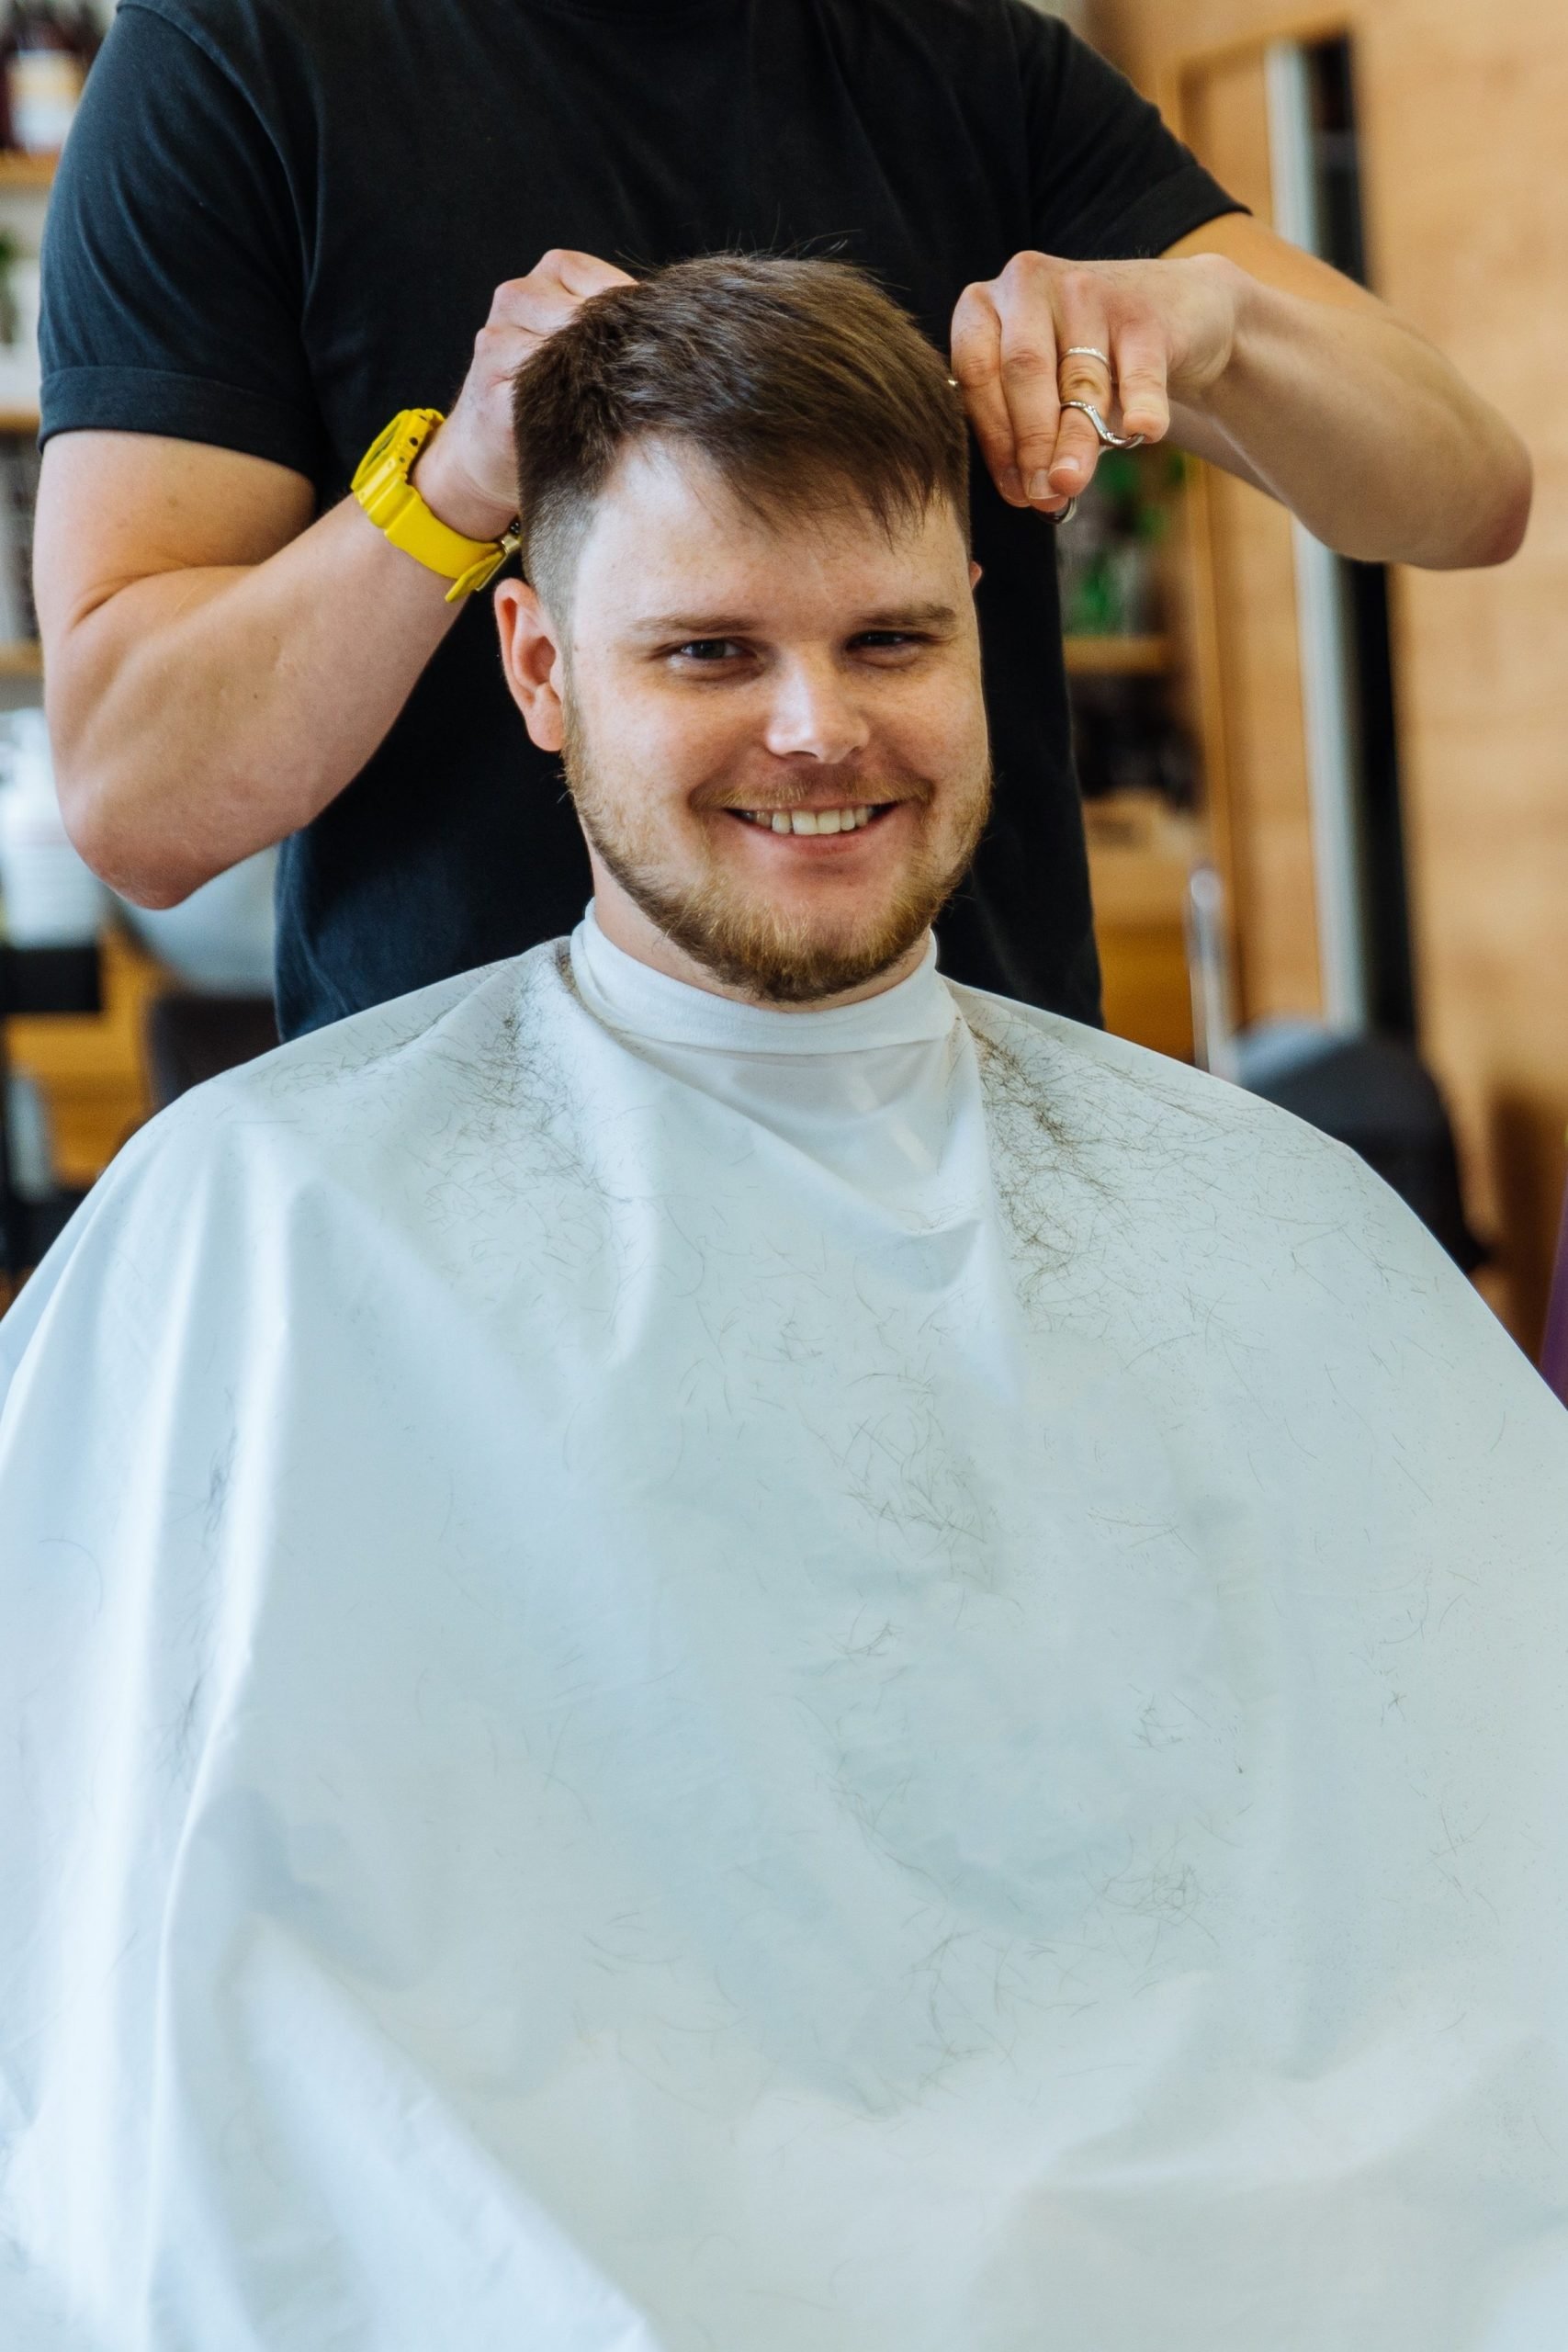 Barbershop Services in Ann Arbor